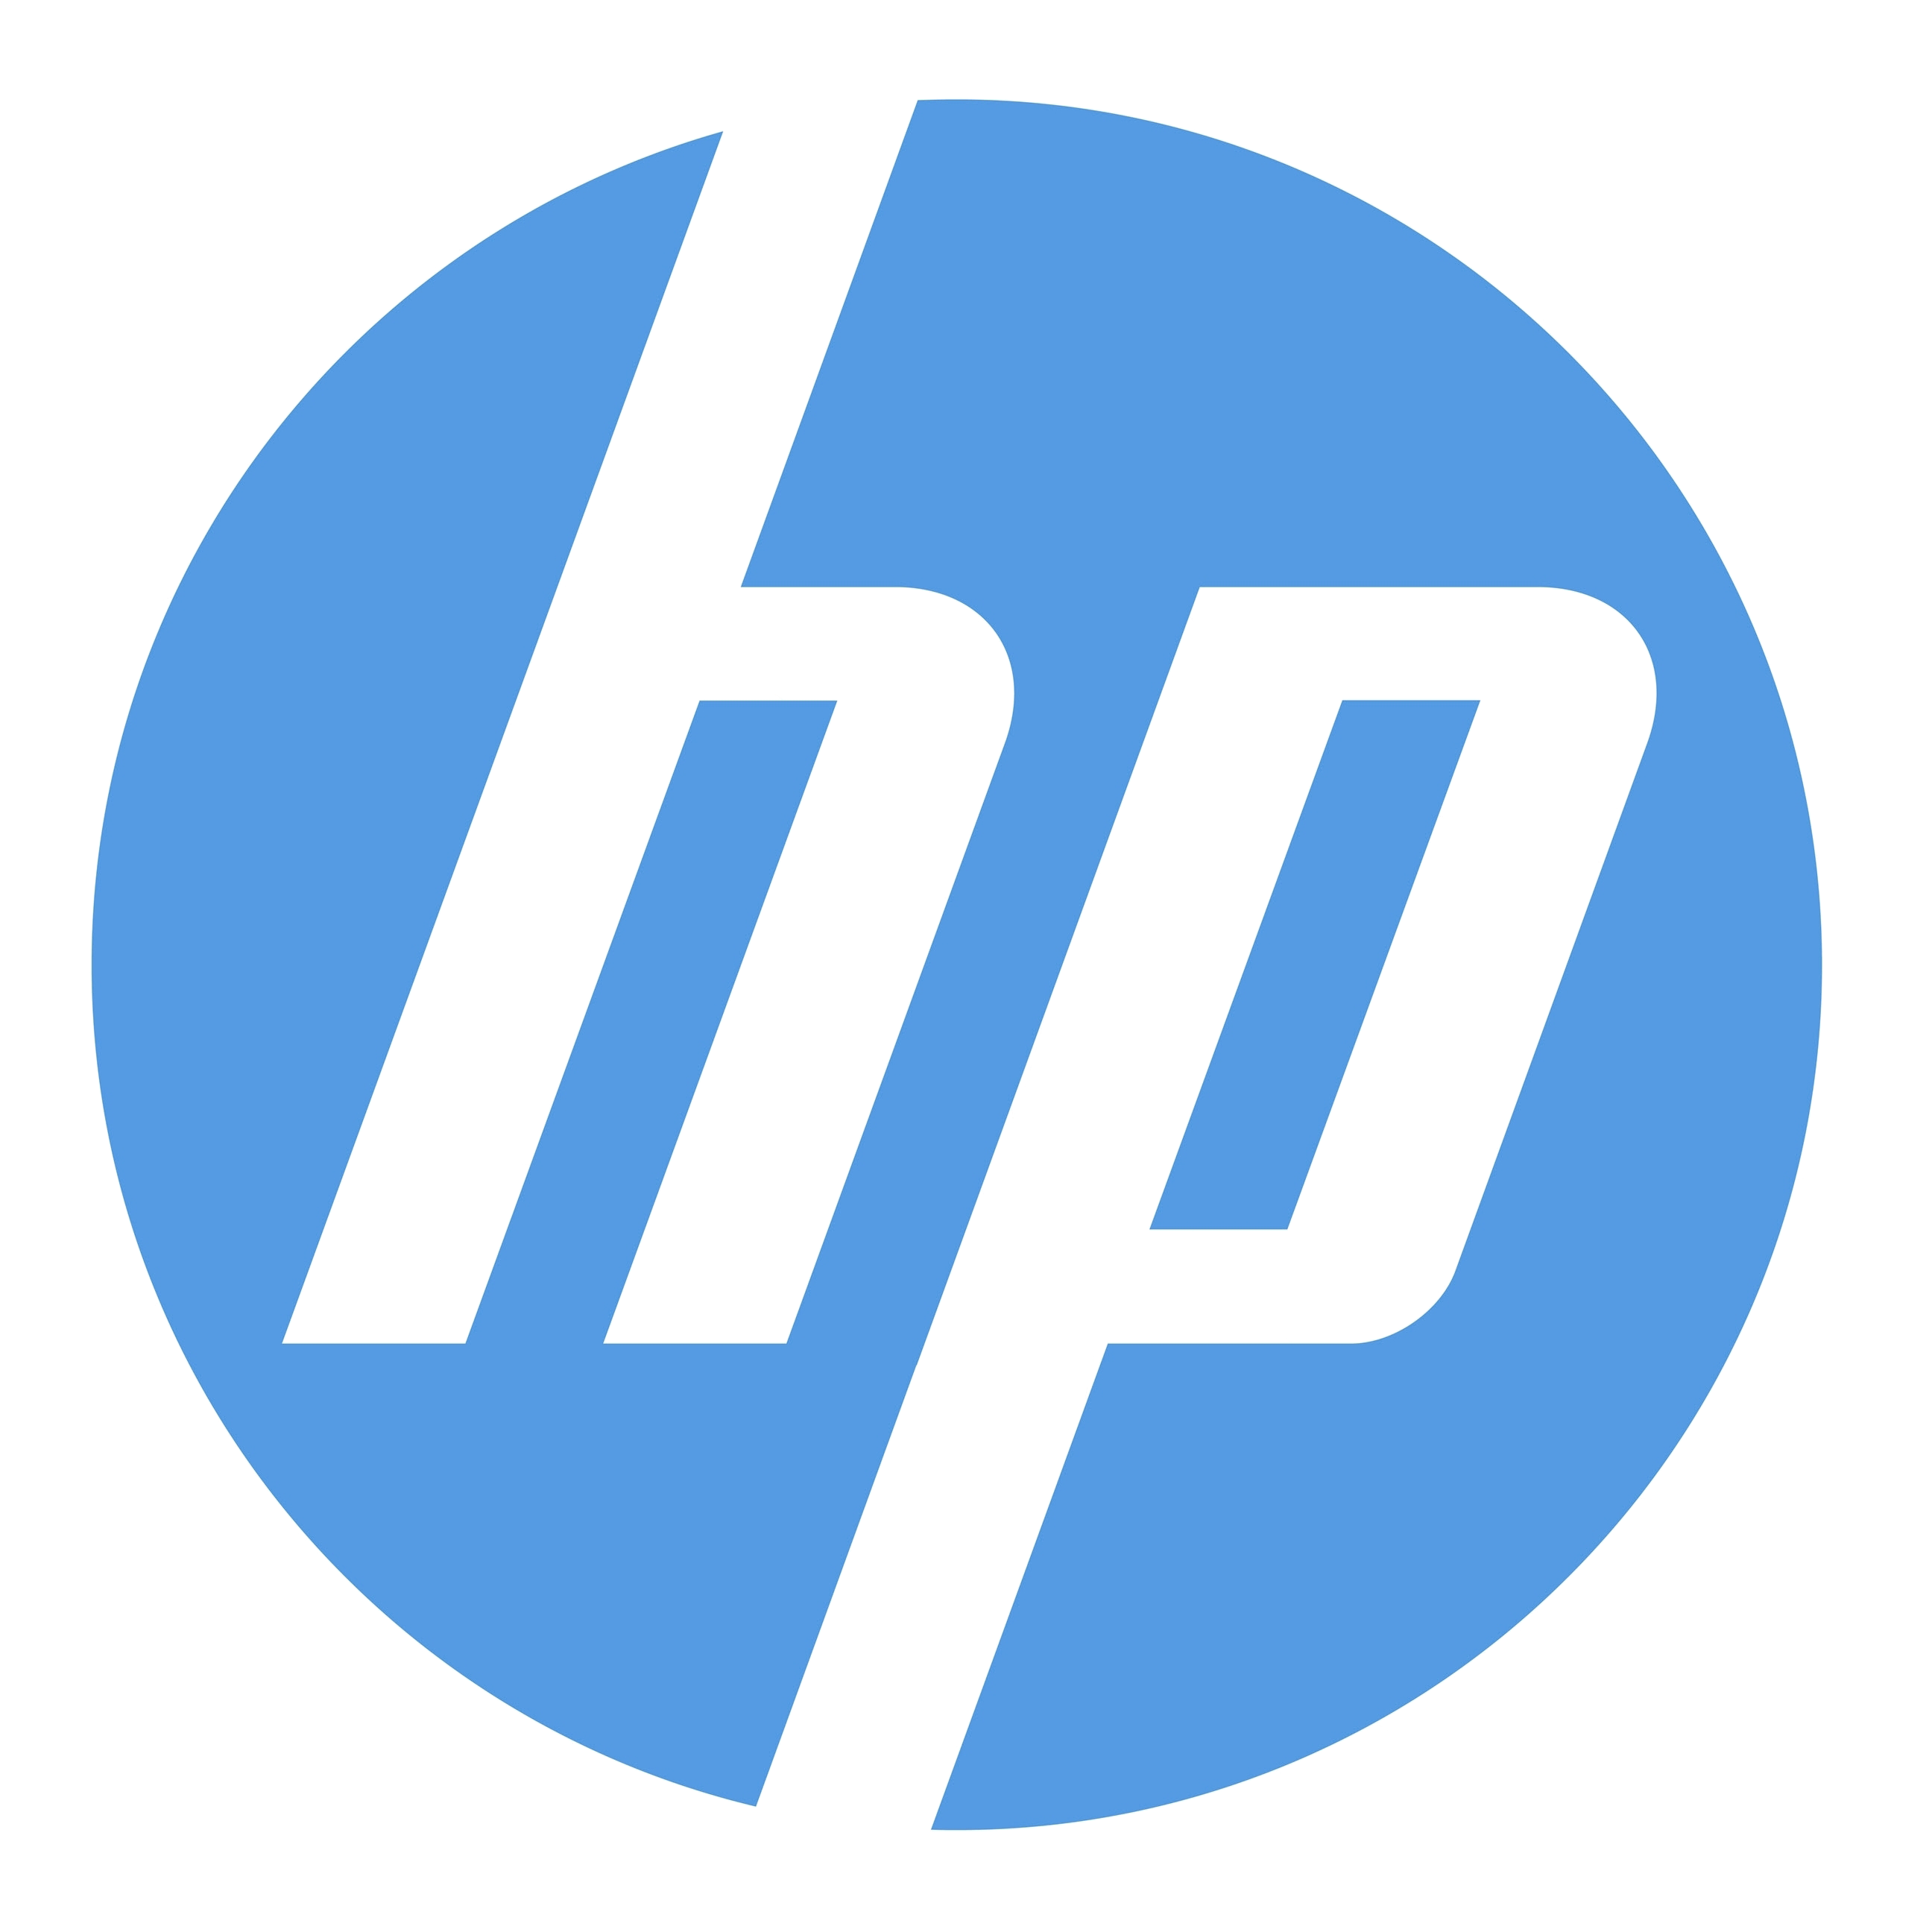 HP-logotyp PNG-bild - PurePNG | Gratis genomskinligt CC0 PNG-bildbibliotek